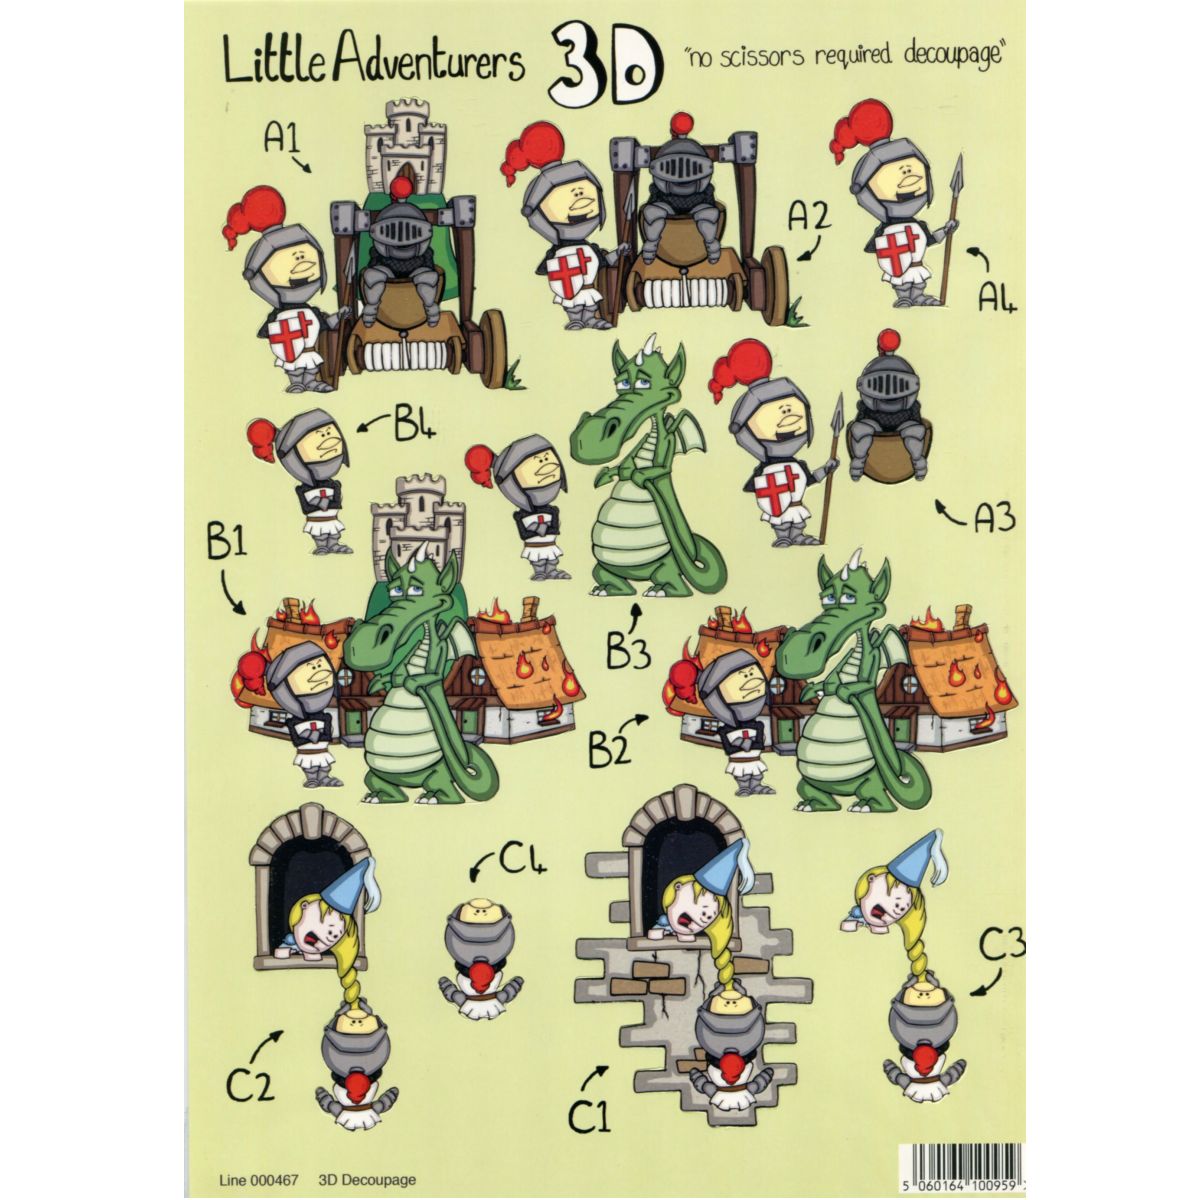 Little Adventurers 3D decoupage for kids